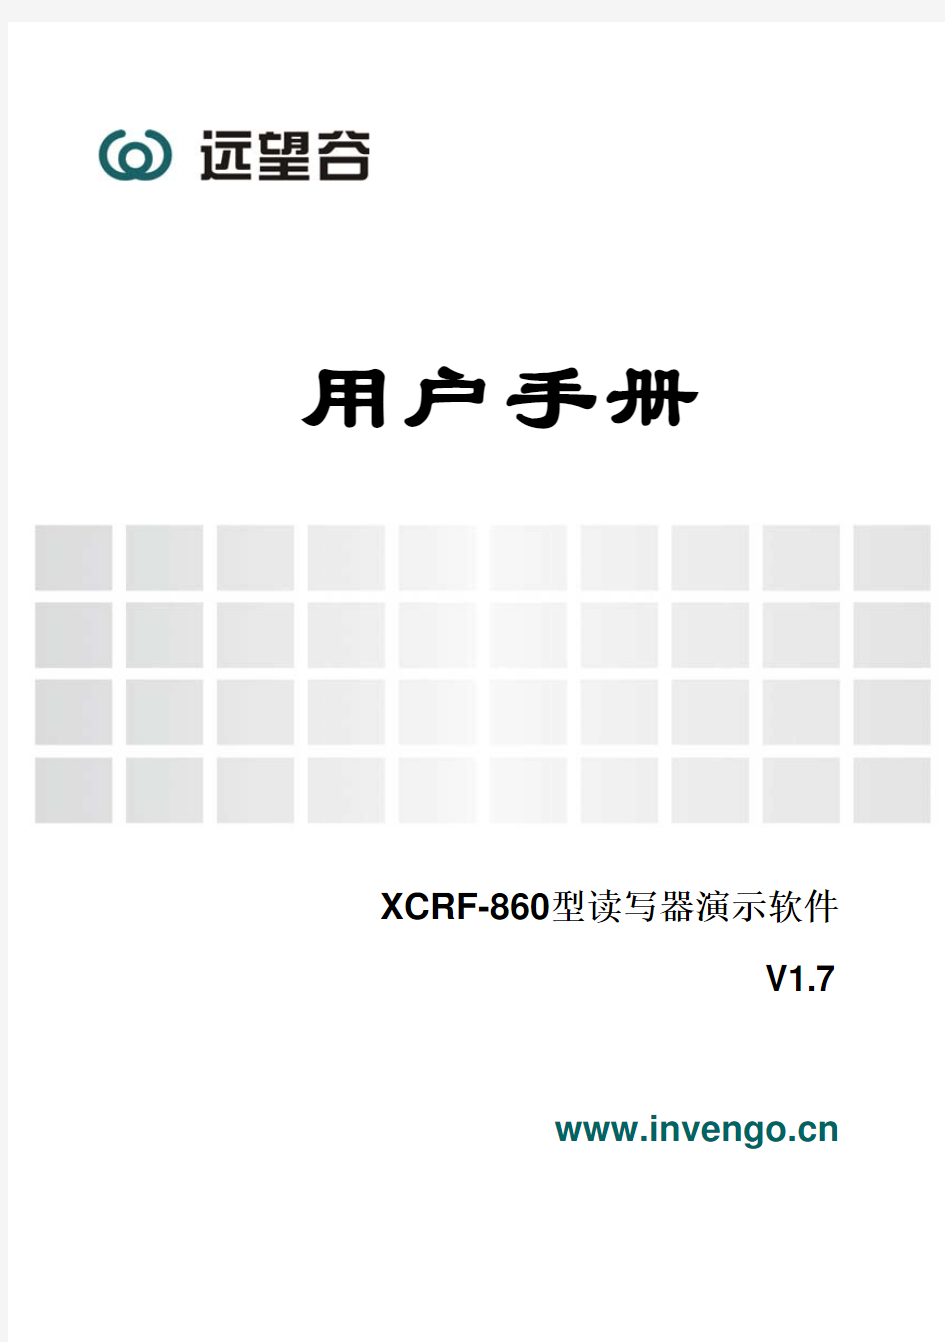 XCRF-860型读写器演示软件用户手册